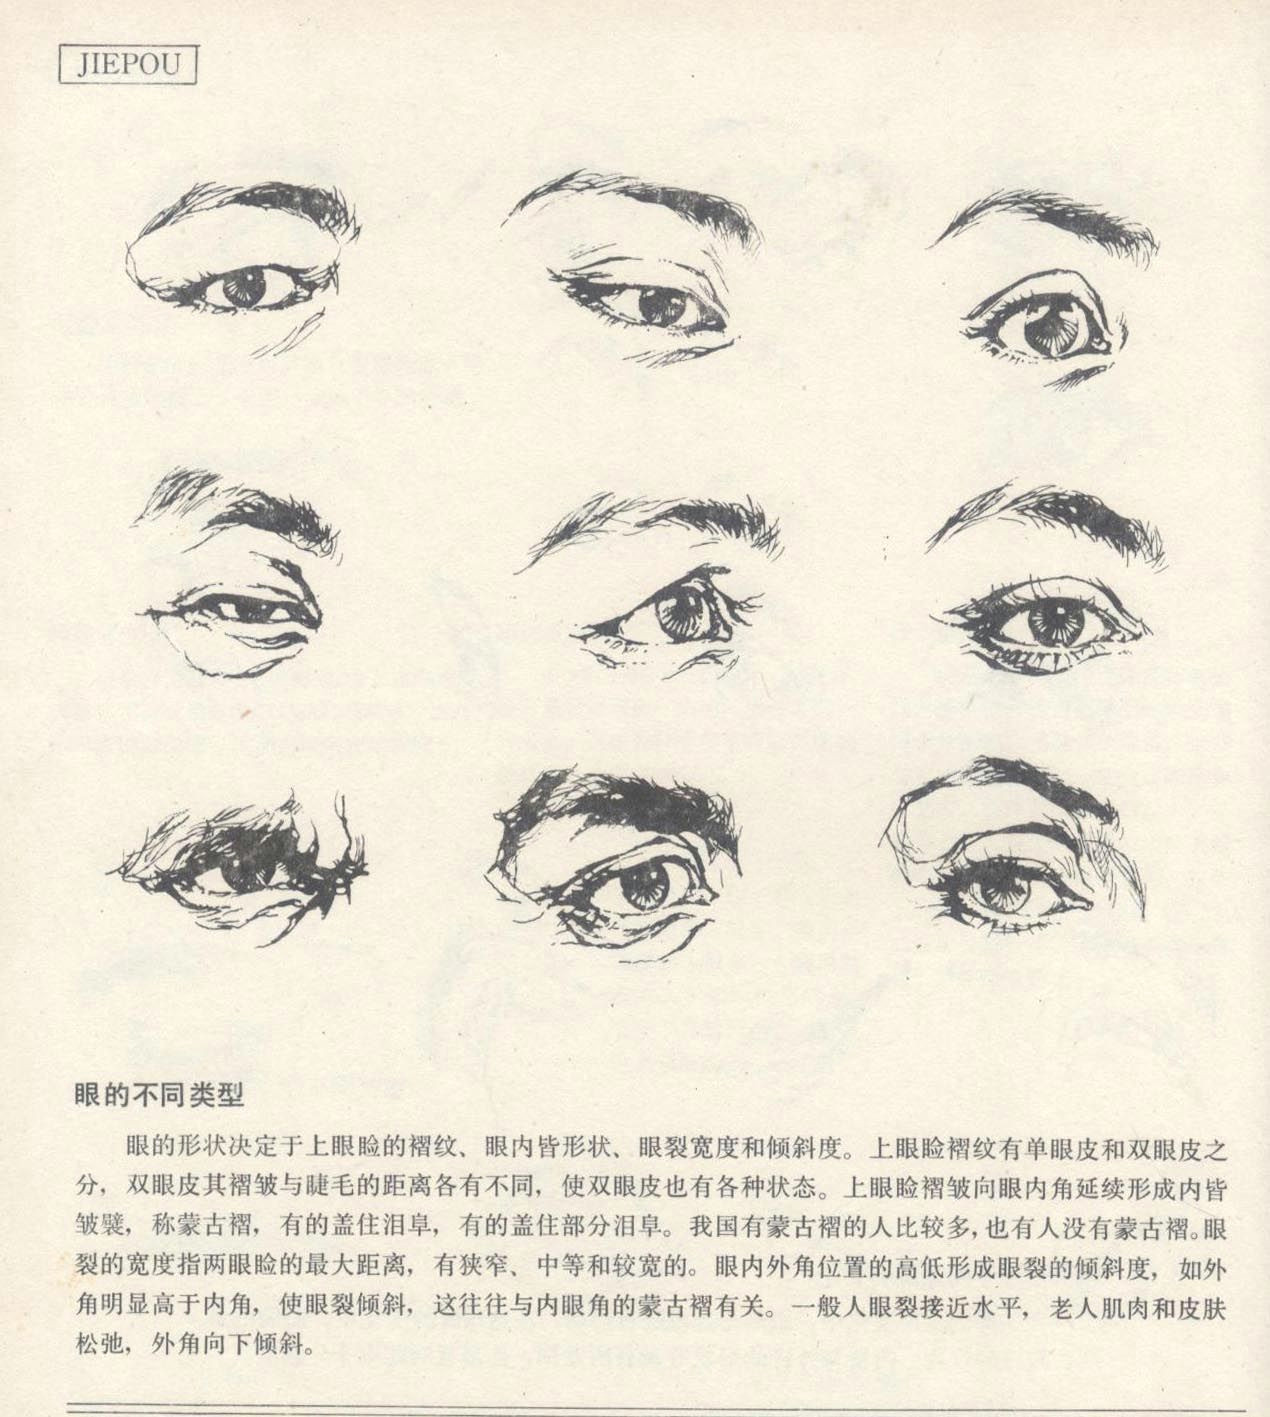 Anatomical Drawing Of the Eye Aooa E A A Oc Aooa A E E A Ae Ae C E Oae A E µe C A E E C Ae A E